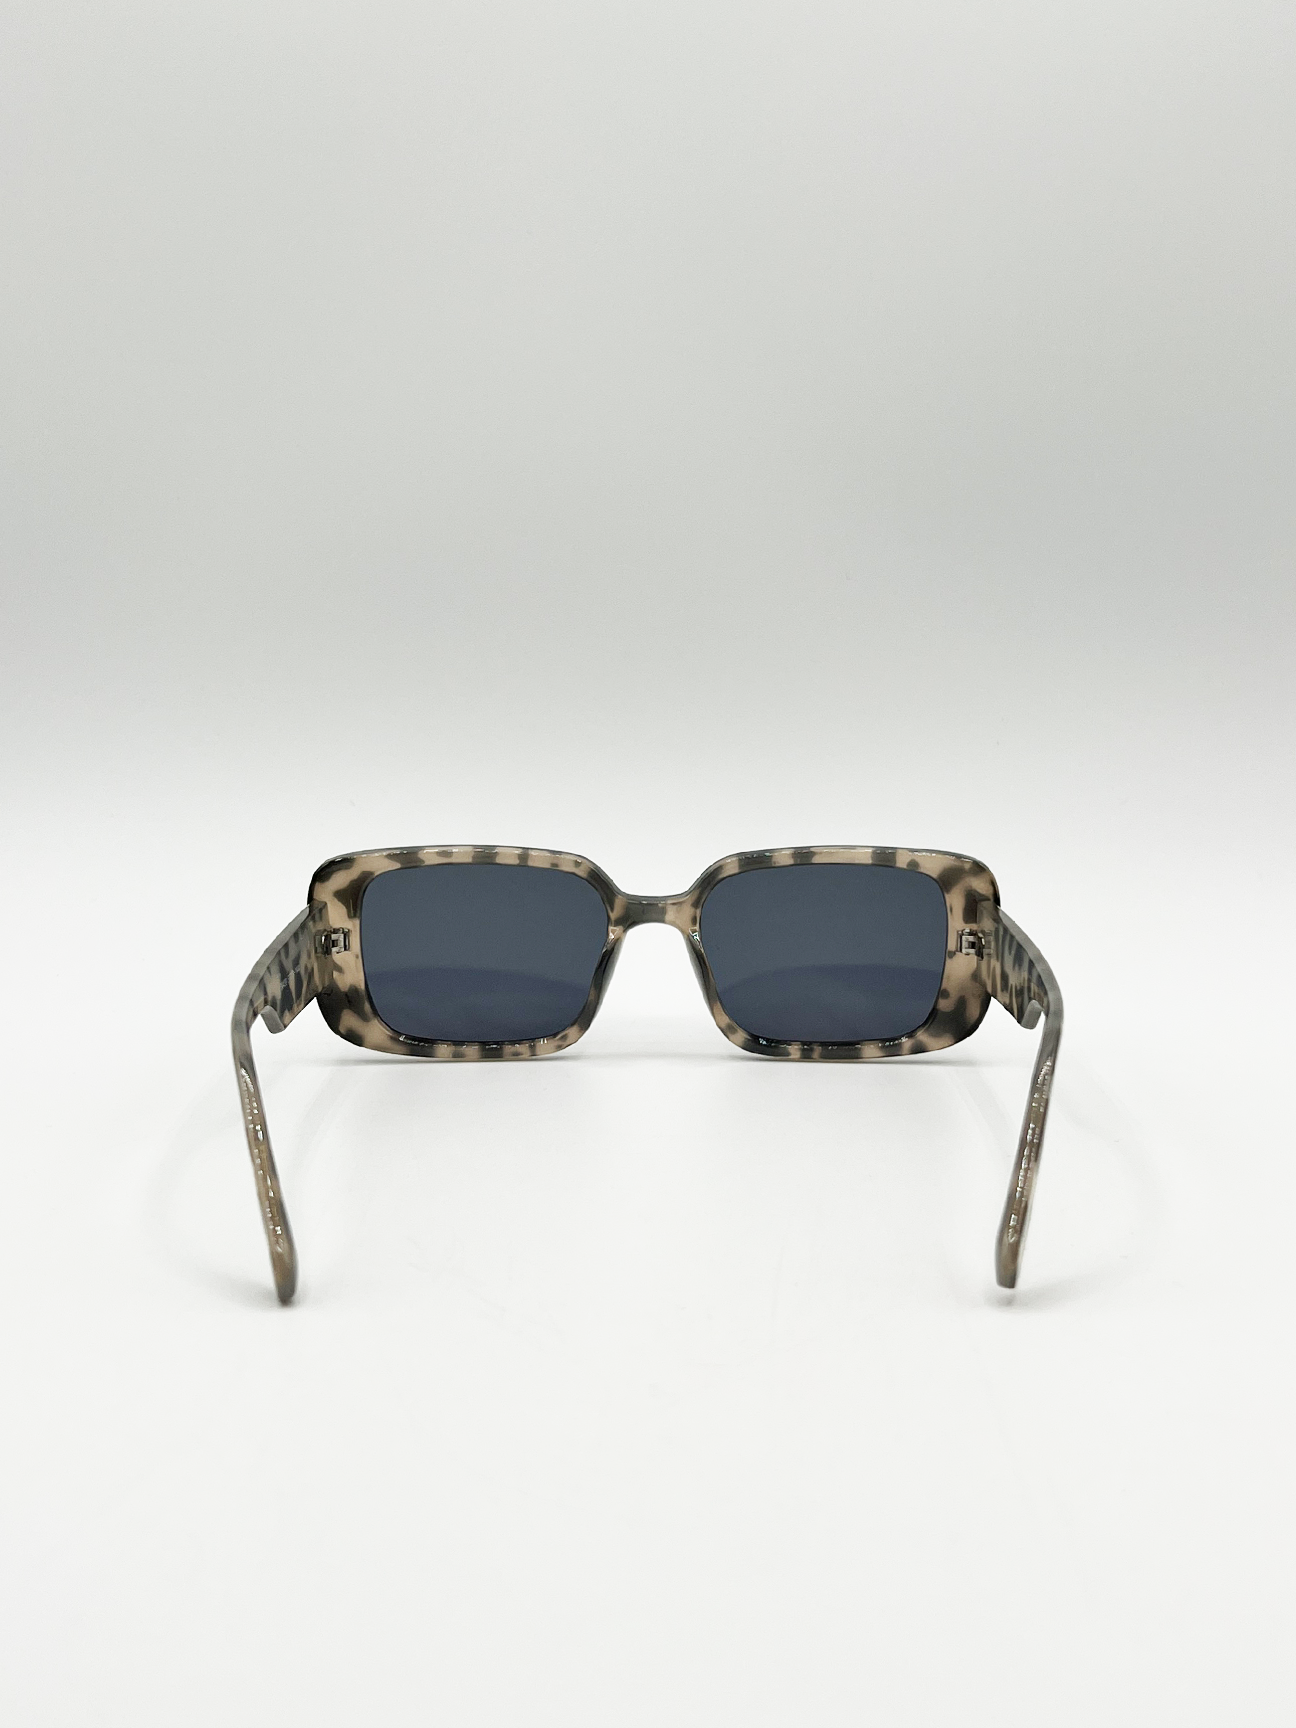 Oversized Rectangle Sunglasses in Animal Print